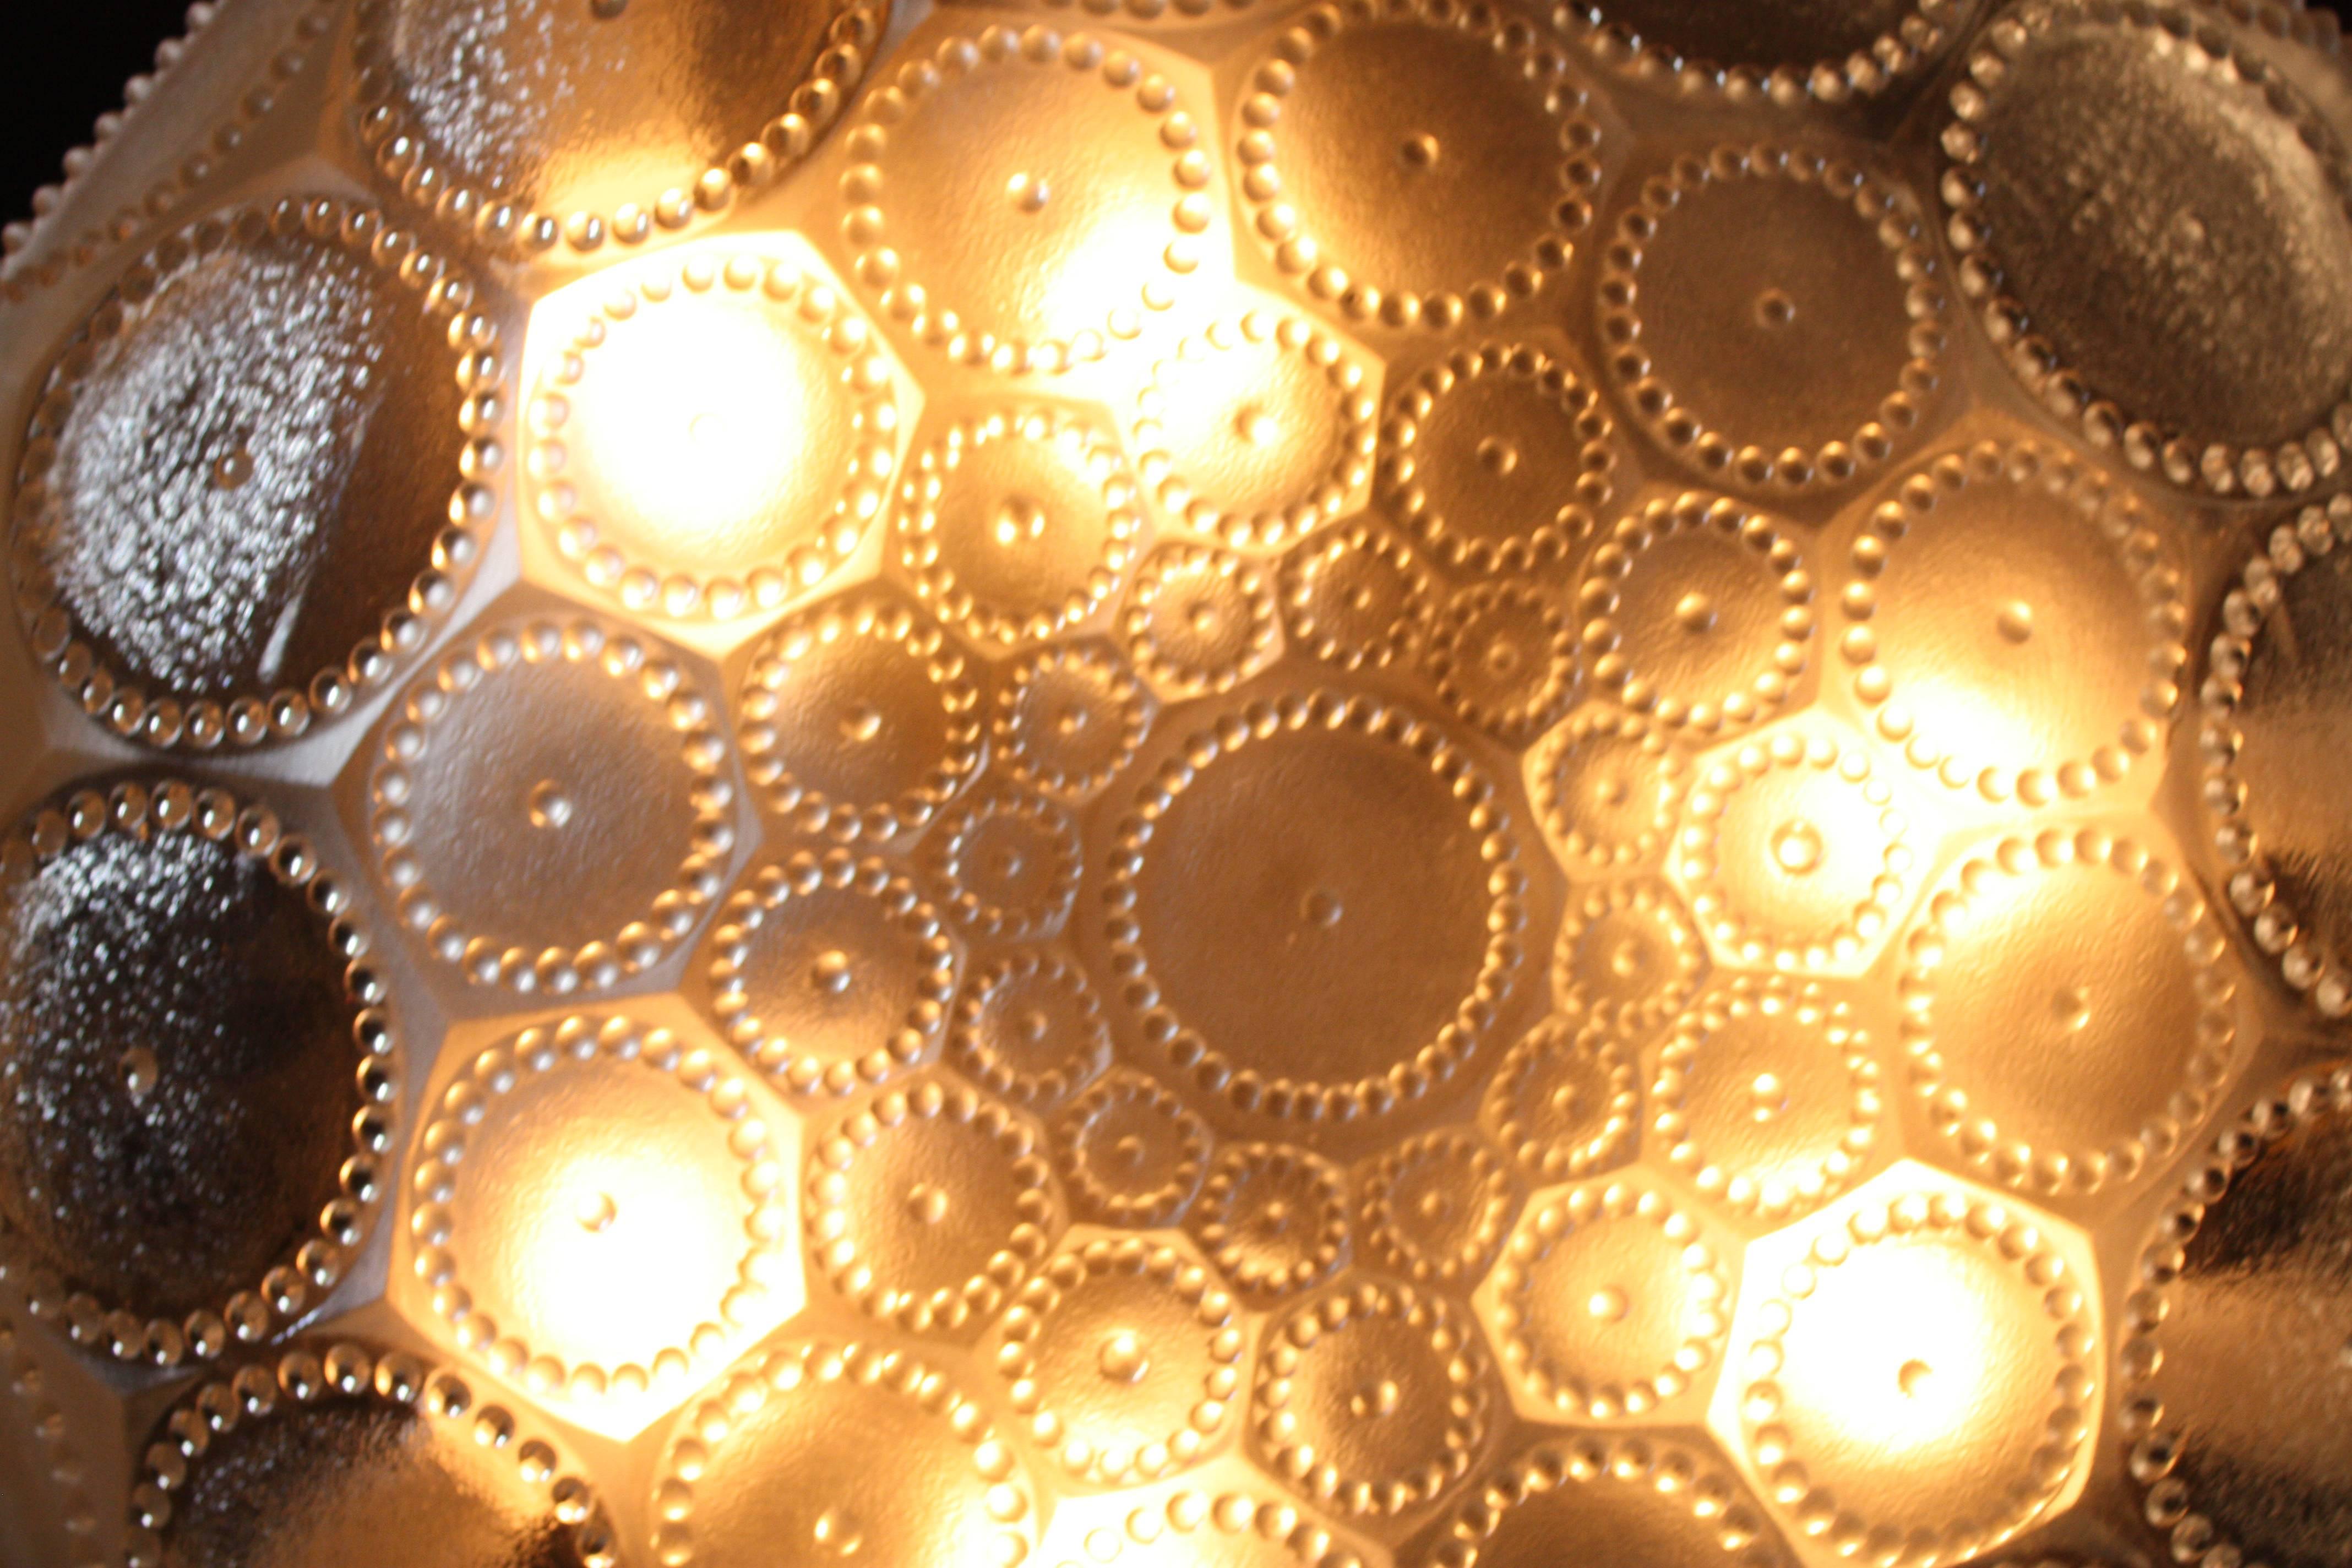 Texture glass Art Deco chandelier with bronze hardware.
Total of six light 60 watt each.